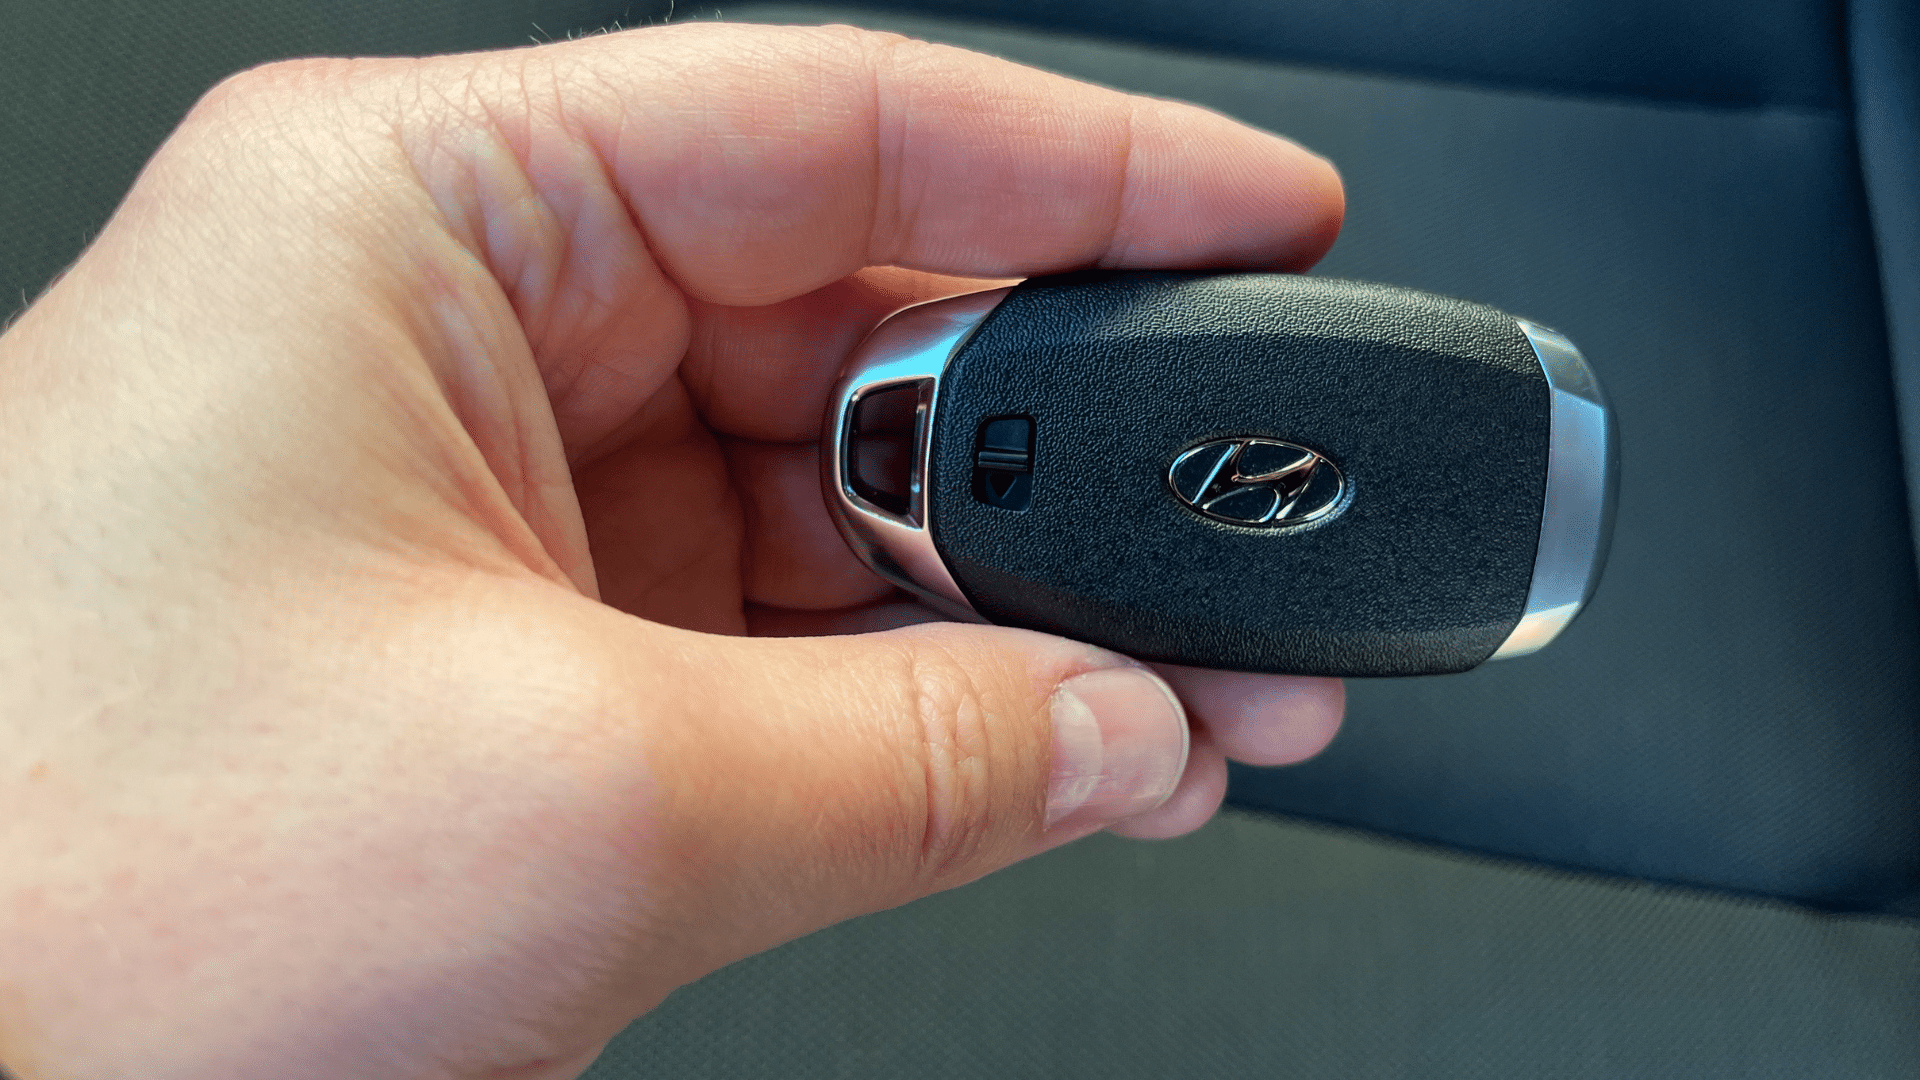 Hand Brand New Key fob - Car key fob